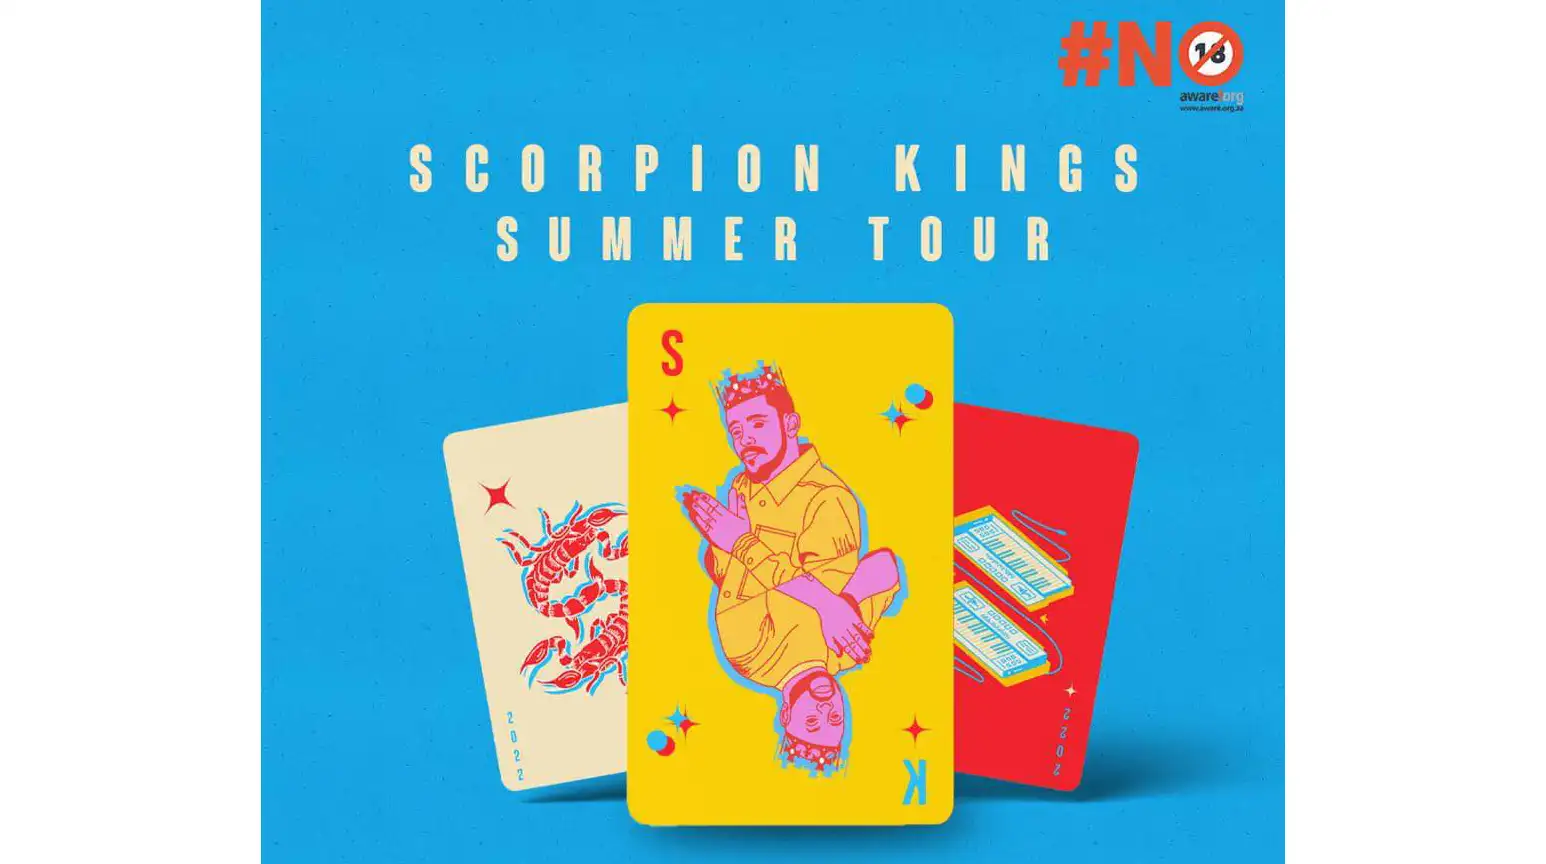 Scorpion Kings Summer Tour dates announced